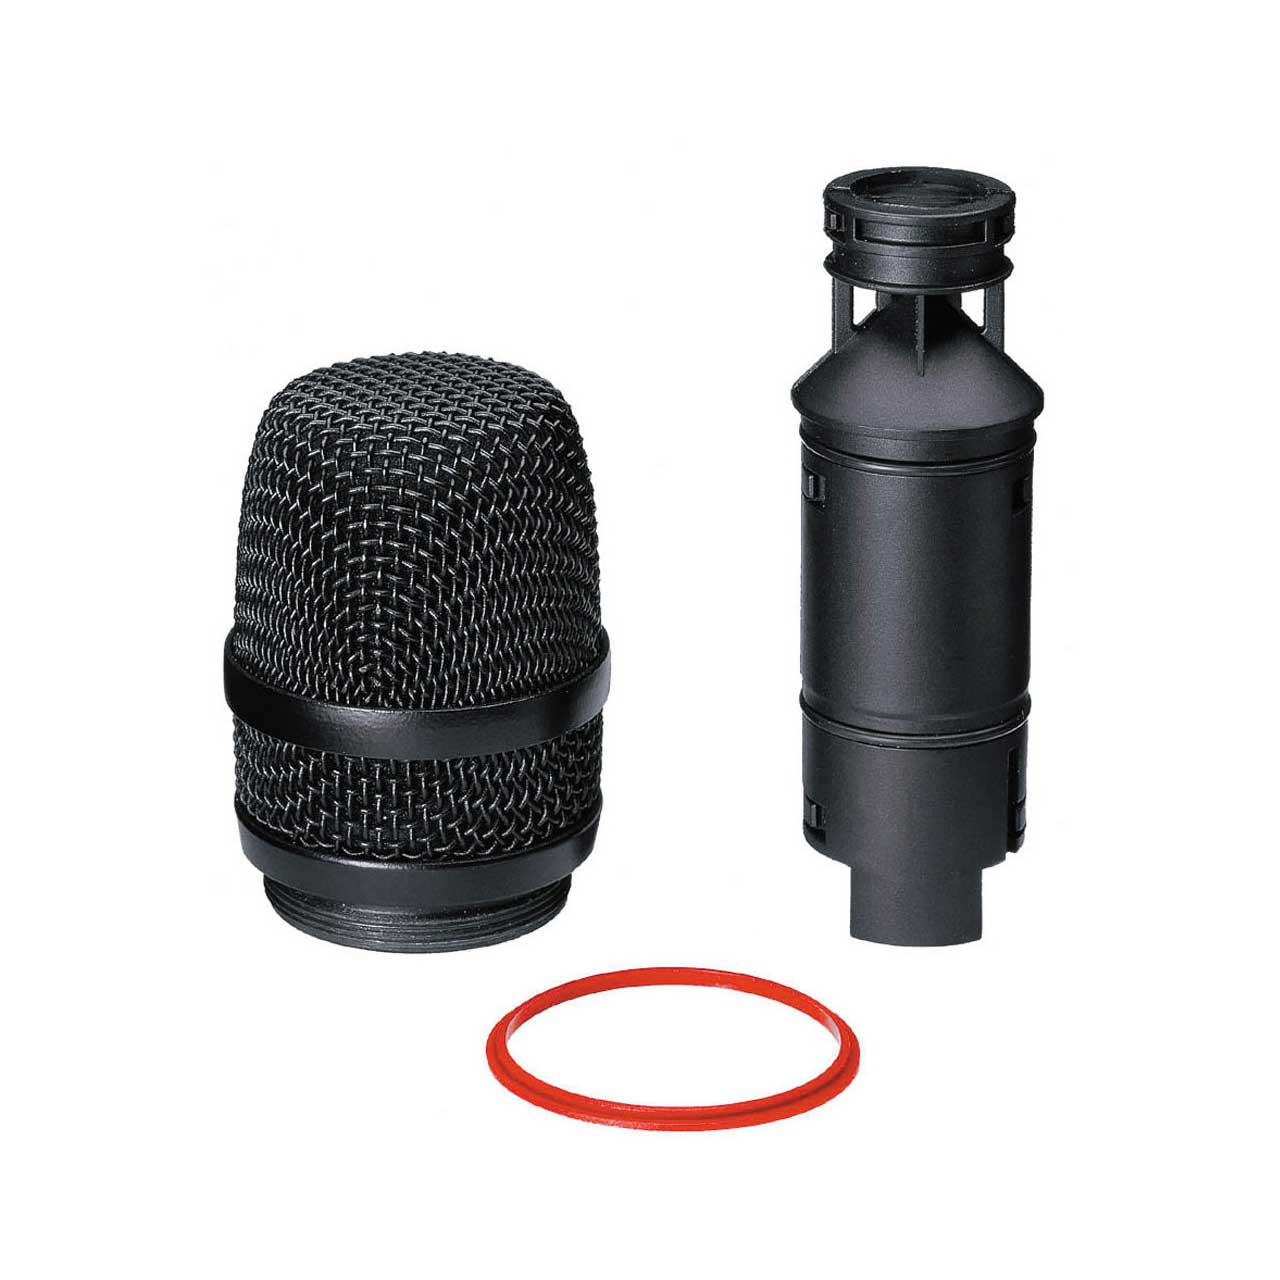 Sennheiser MME 865-1 BK e865 Polarized - Condenser - Super-Cardioid Microphone for G3/G4 or 2000 Series SKM